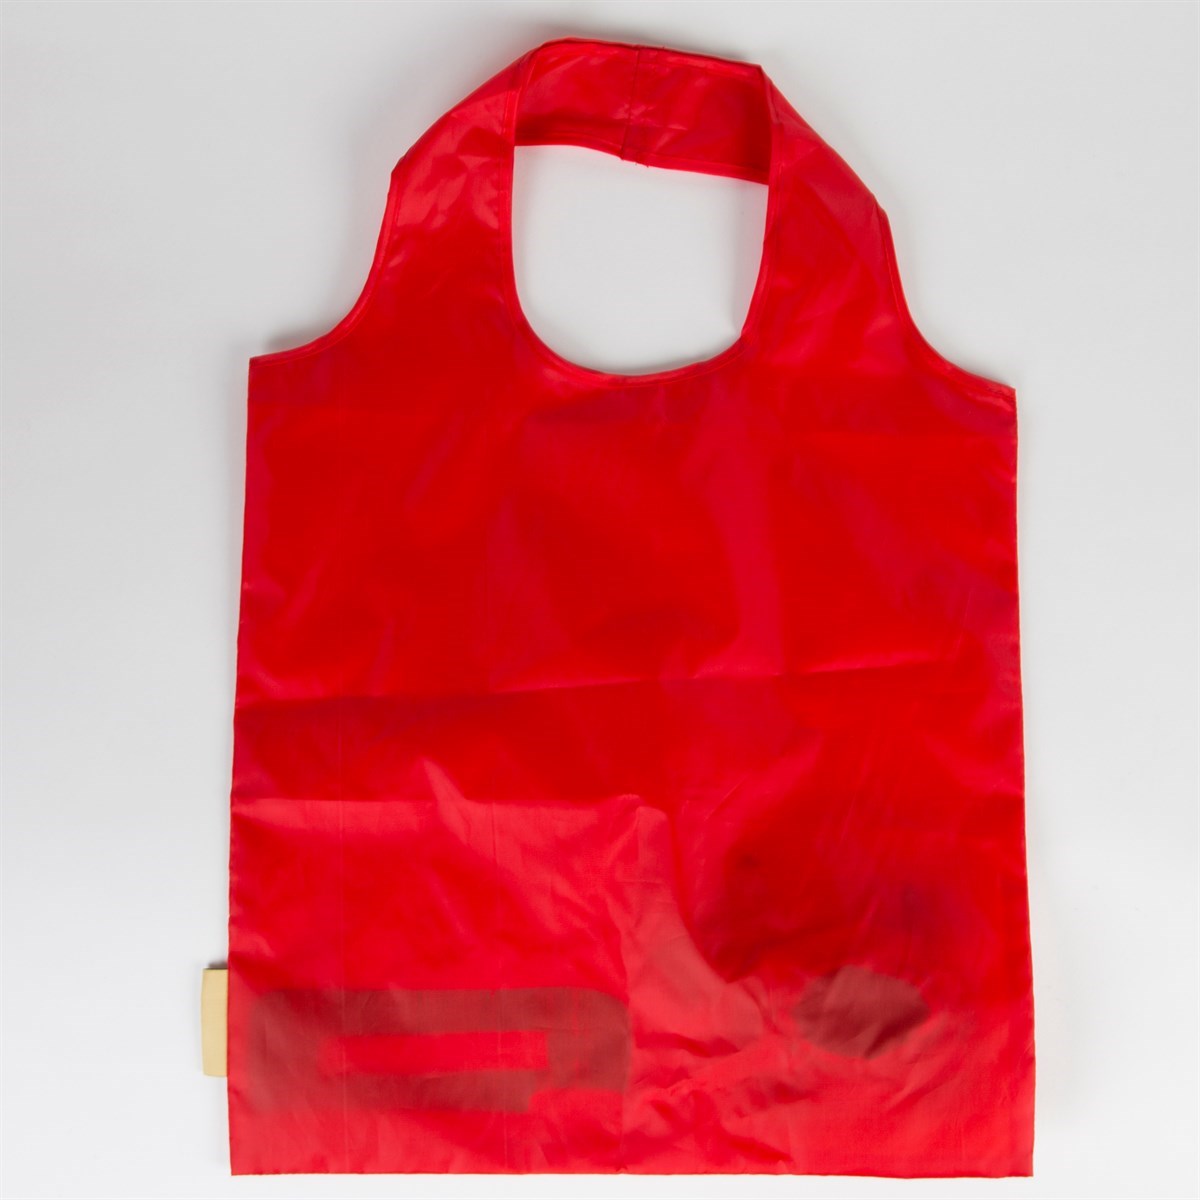 Scottie Dog Foldable shopping bag by RJB Stone